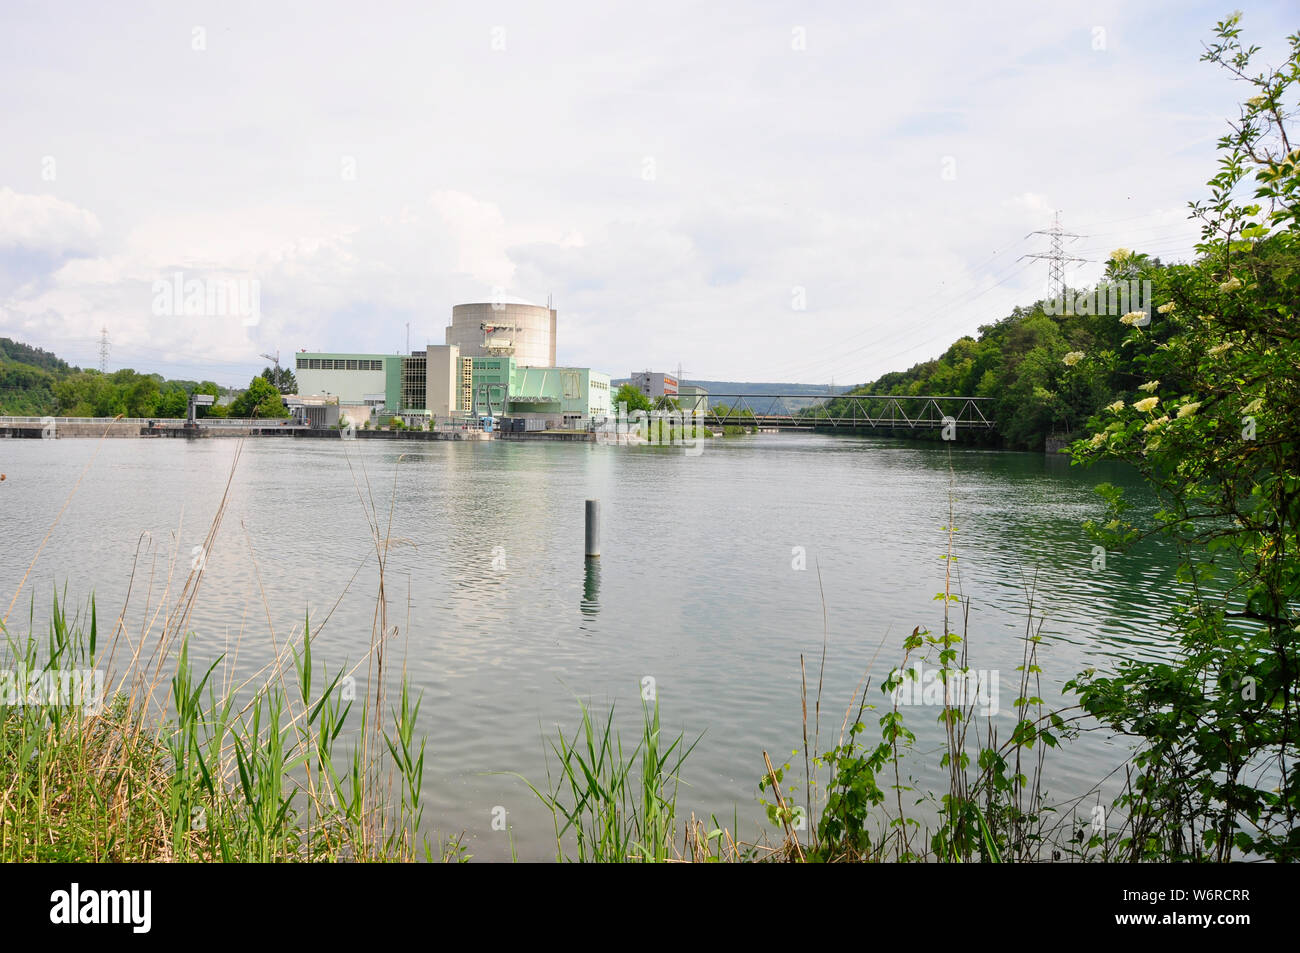 Switzerland: The Nuclear Power Station Beznau near Döttingen in canton Aargau Stock Photo